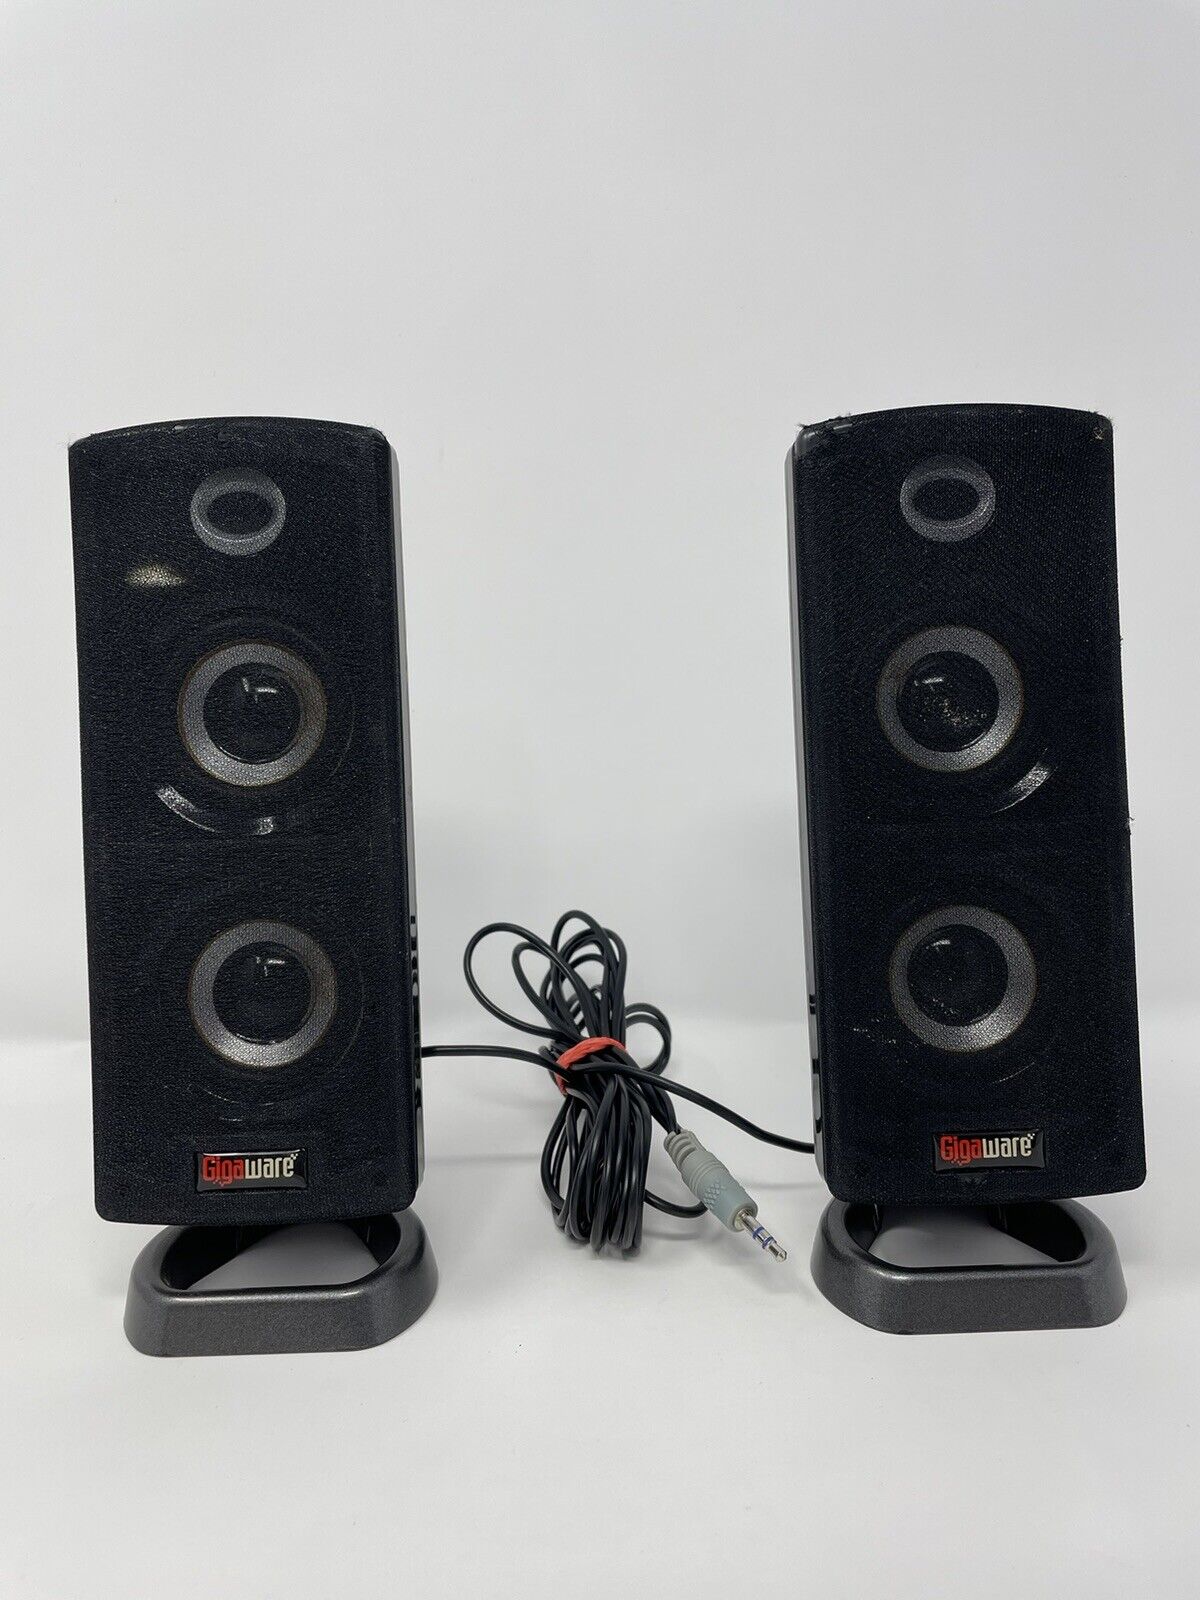 Gigaware 40-286 2.1 Multimedia Computer Speakers